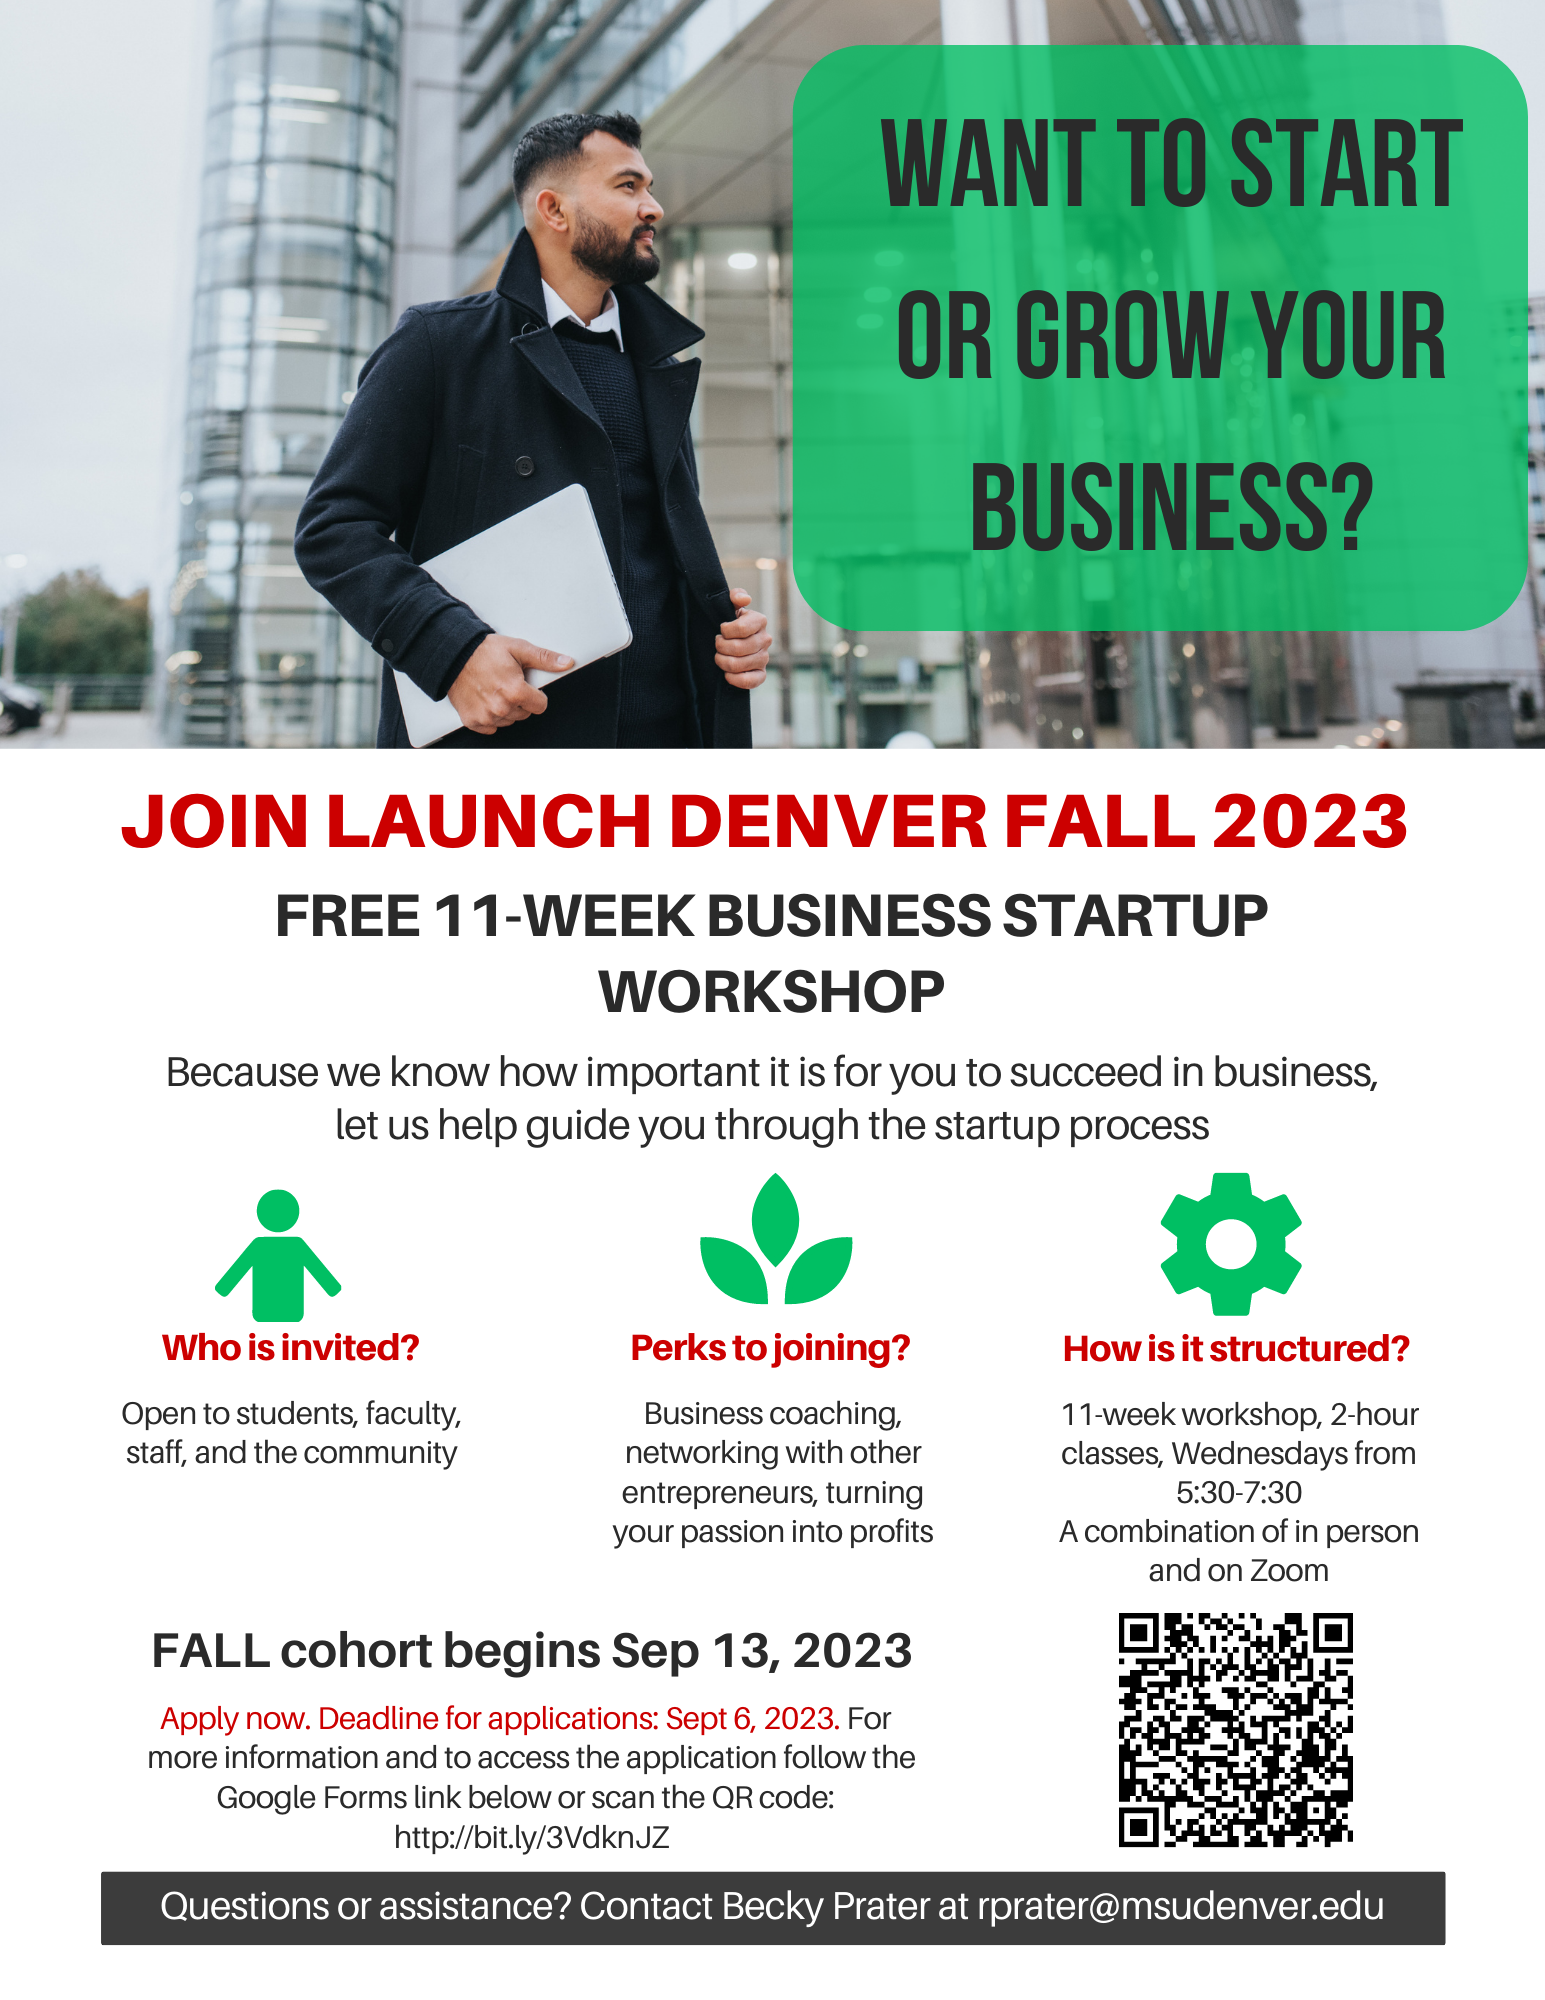 Launch Denver Fall 2023 Information